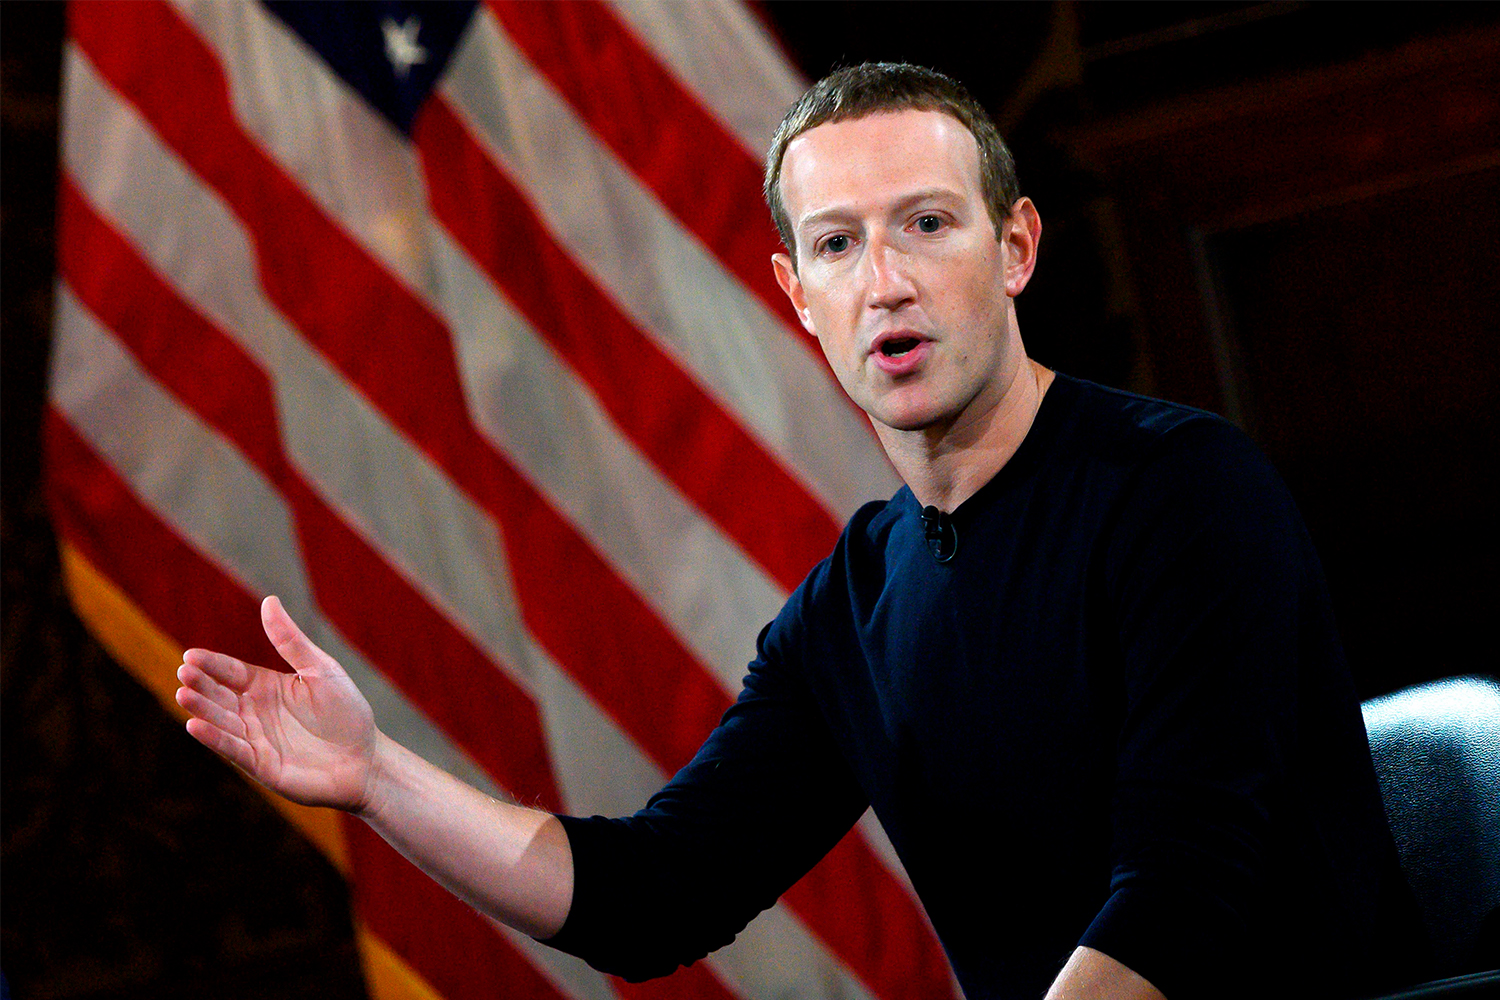 Facebook founder Mark Zuckerberg speaks at Georgetown University in October 2019